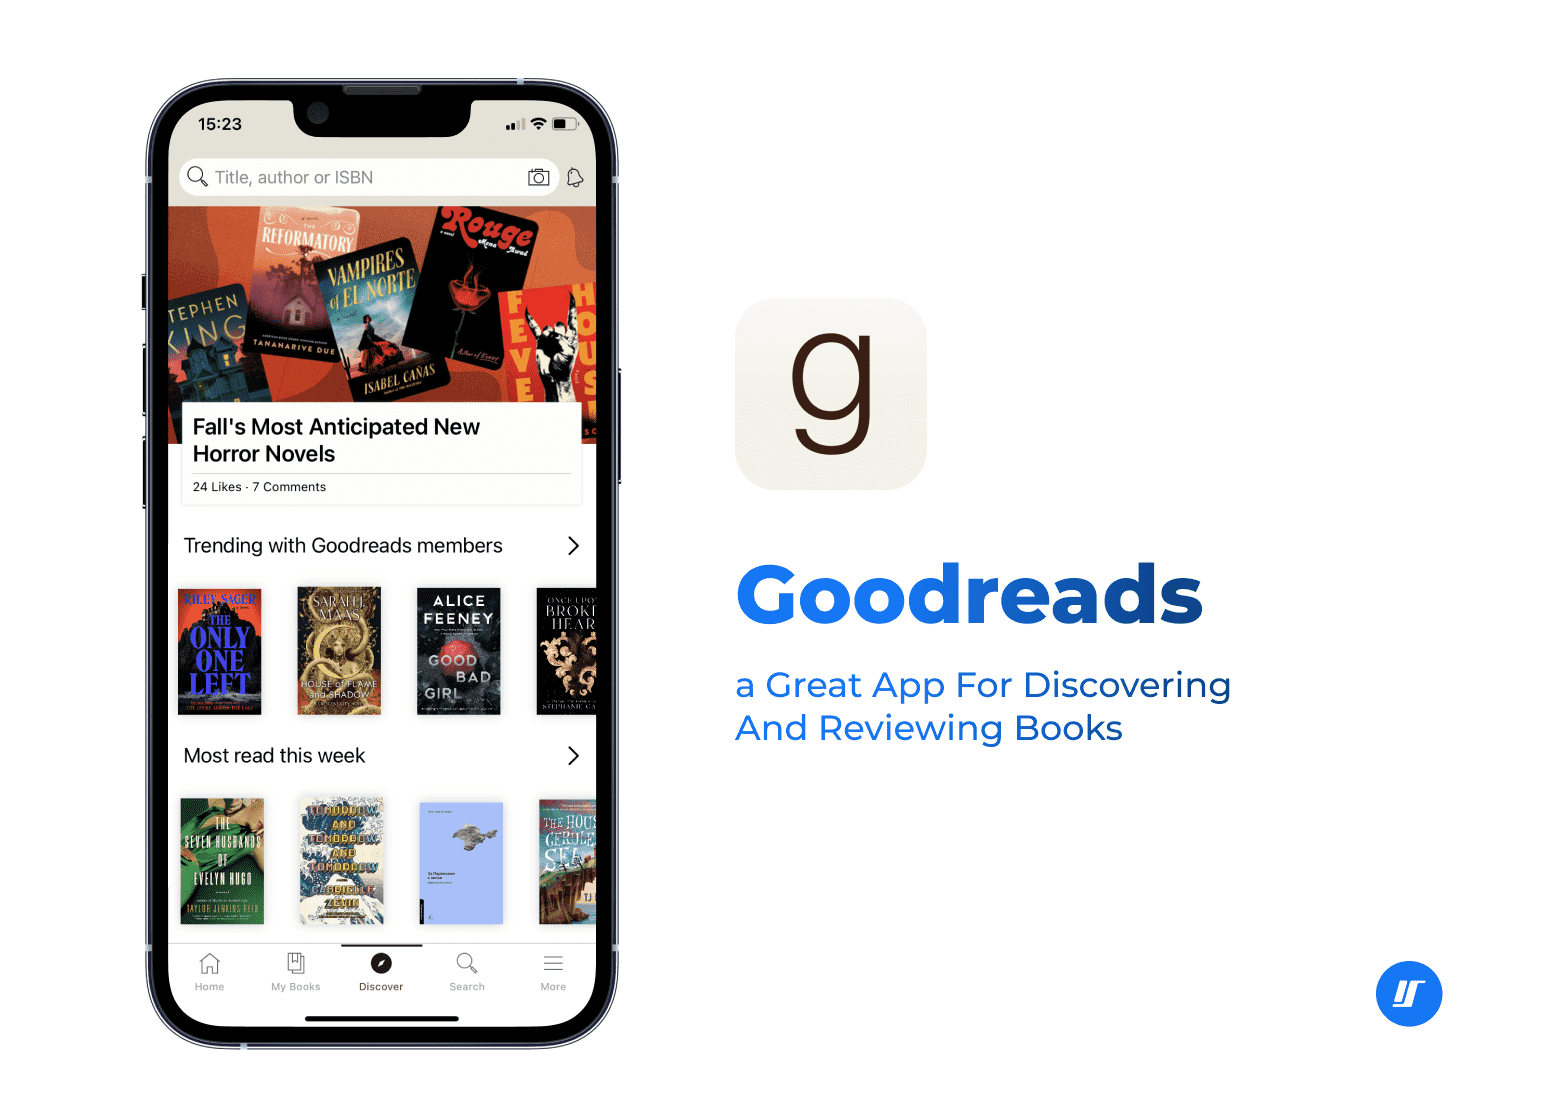 Goodreads app screenshot on the iPhone screen